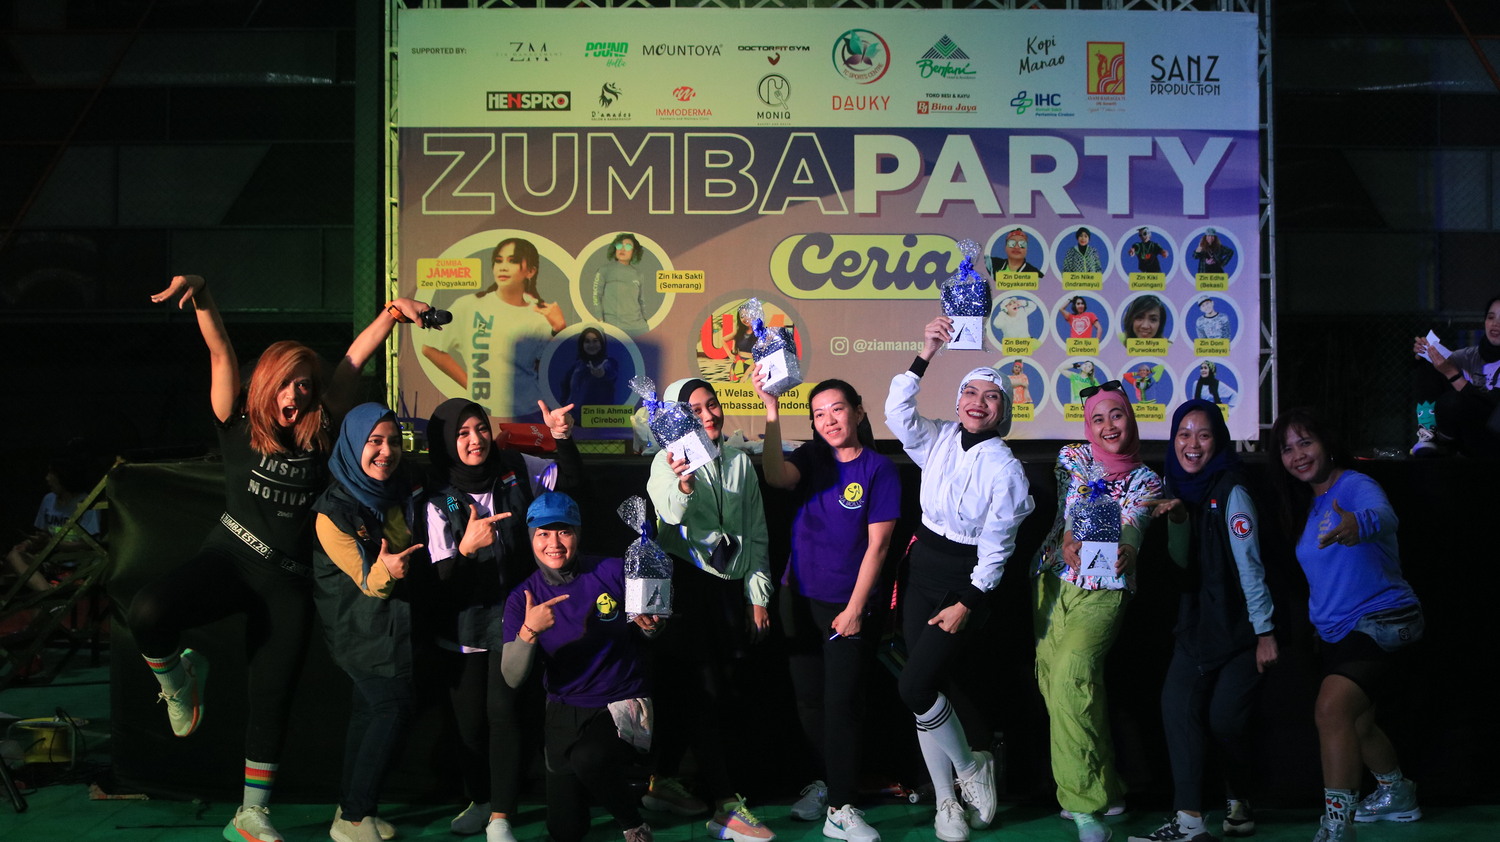 Semangat Sehat RS Pertamina Cirebon Support Tim Medis dalam Acara Zumba Party di Sport Center Cirebon